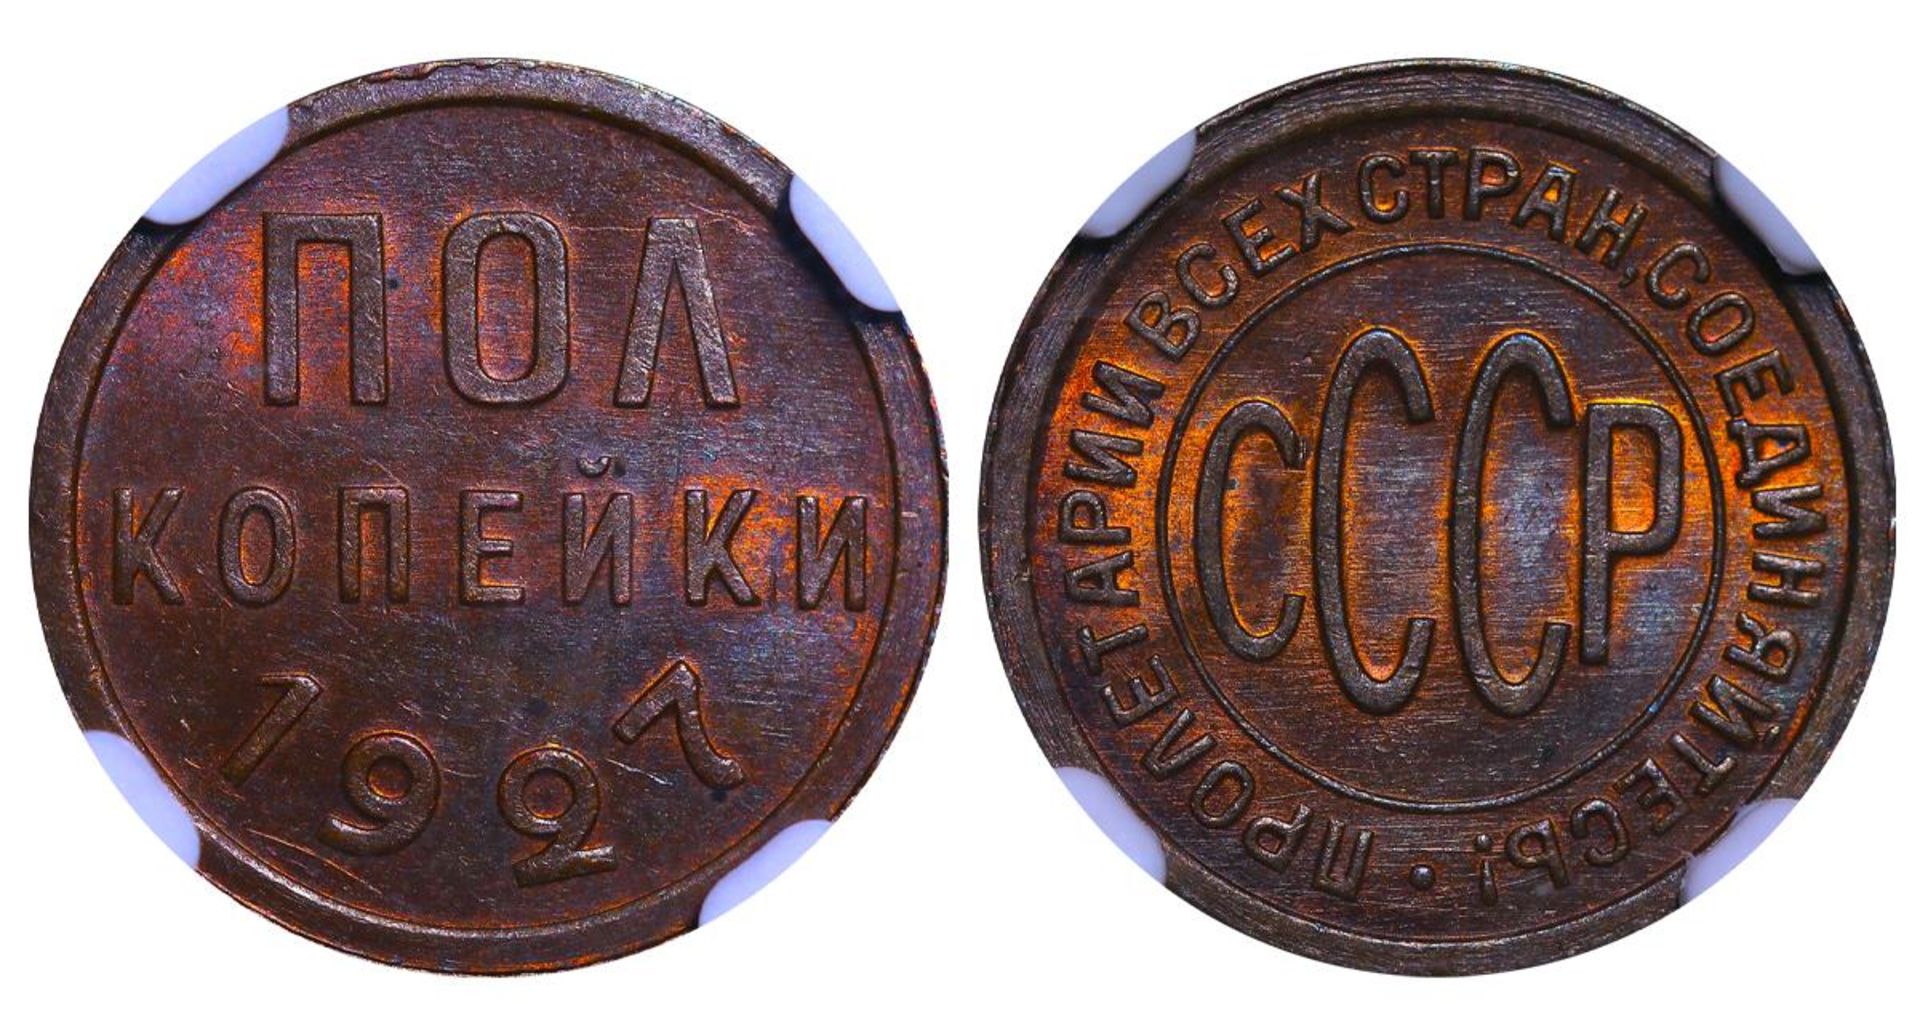 Soviet Union, ½ Kopeck, 1927 year, NGC, MS 64 BN